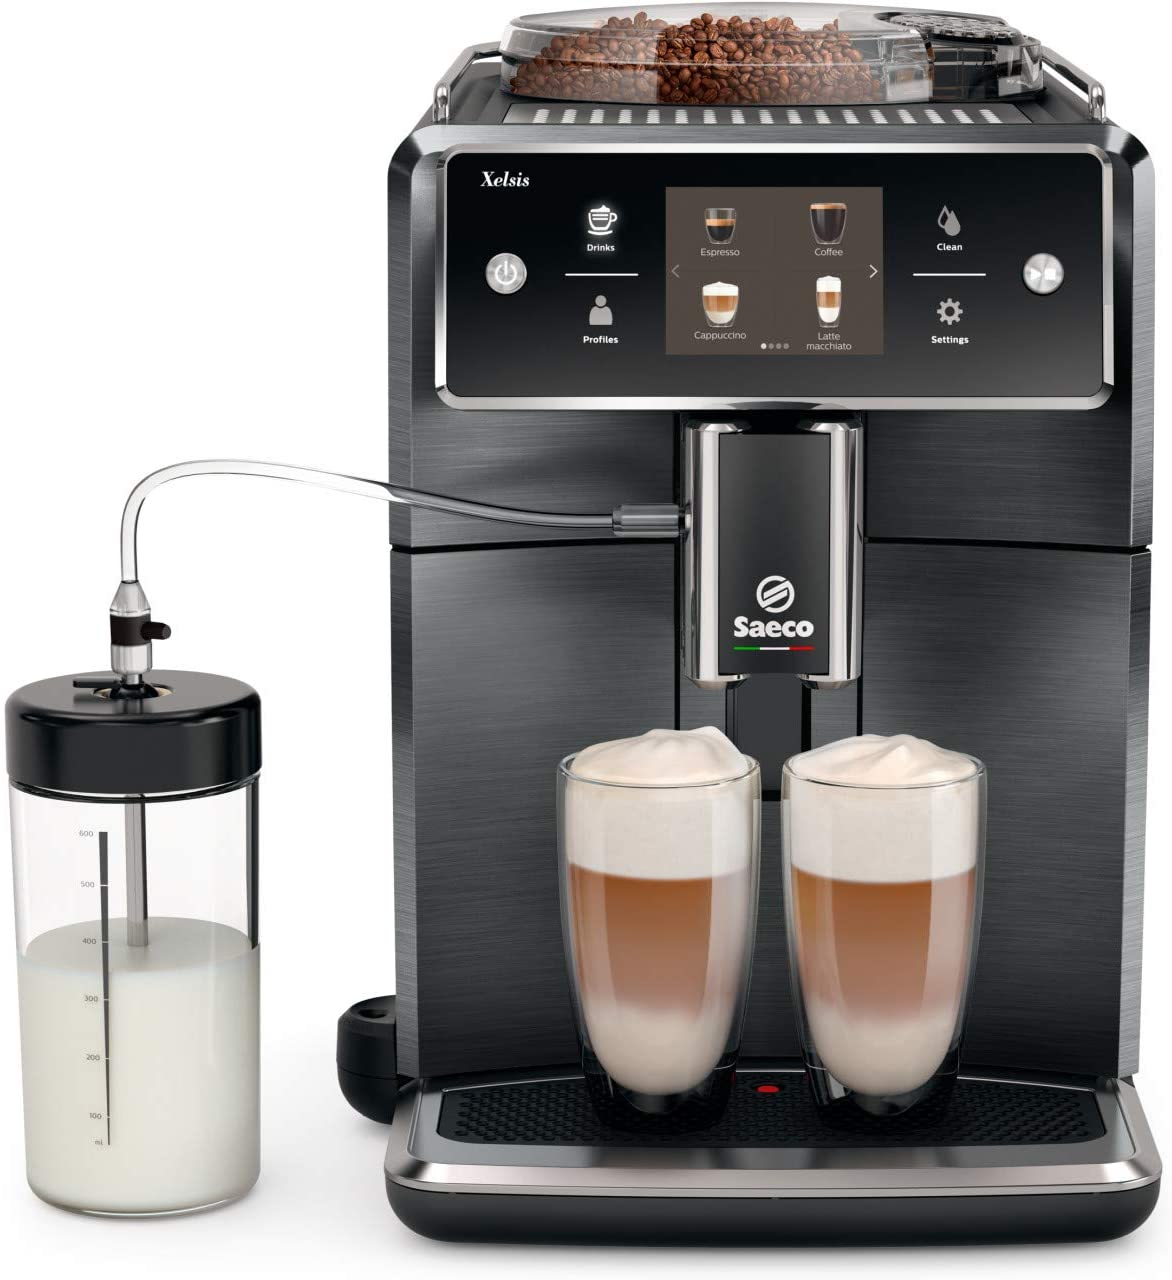 Saeco Xelsis Super Automatic Espresso Machine SM768404 Review